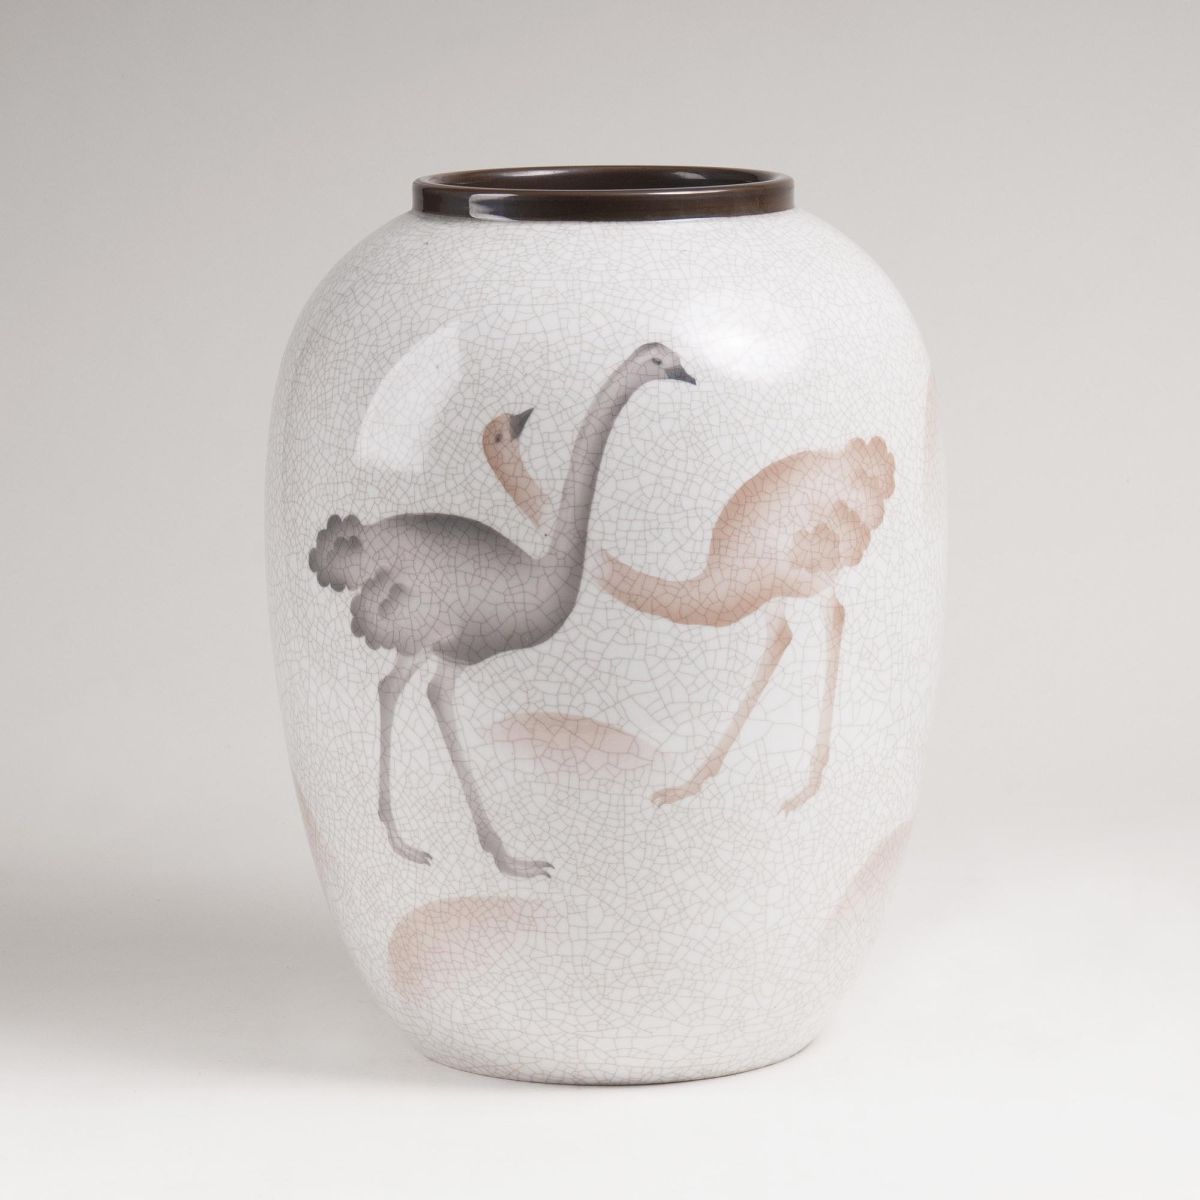 A Large Art-déco Vase with Ostriches